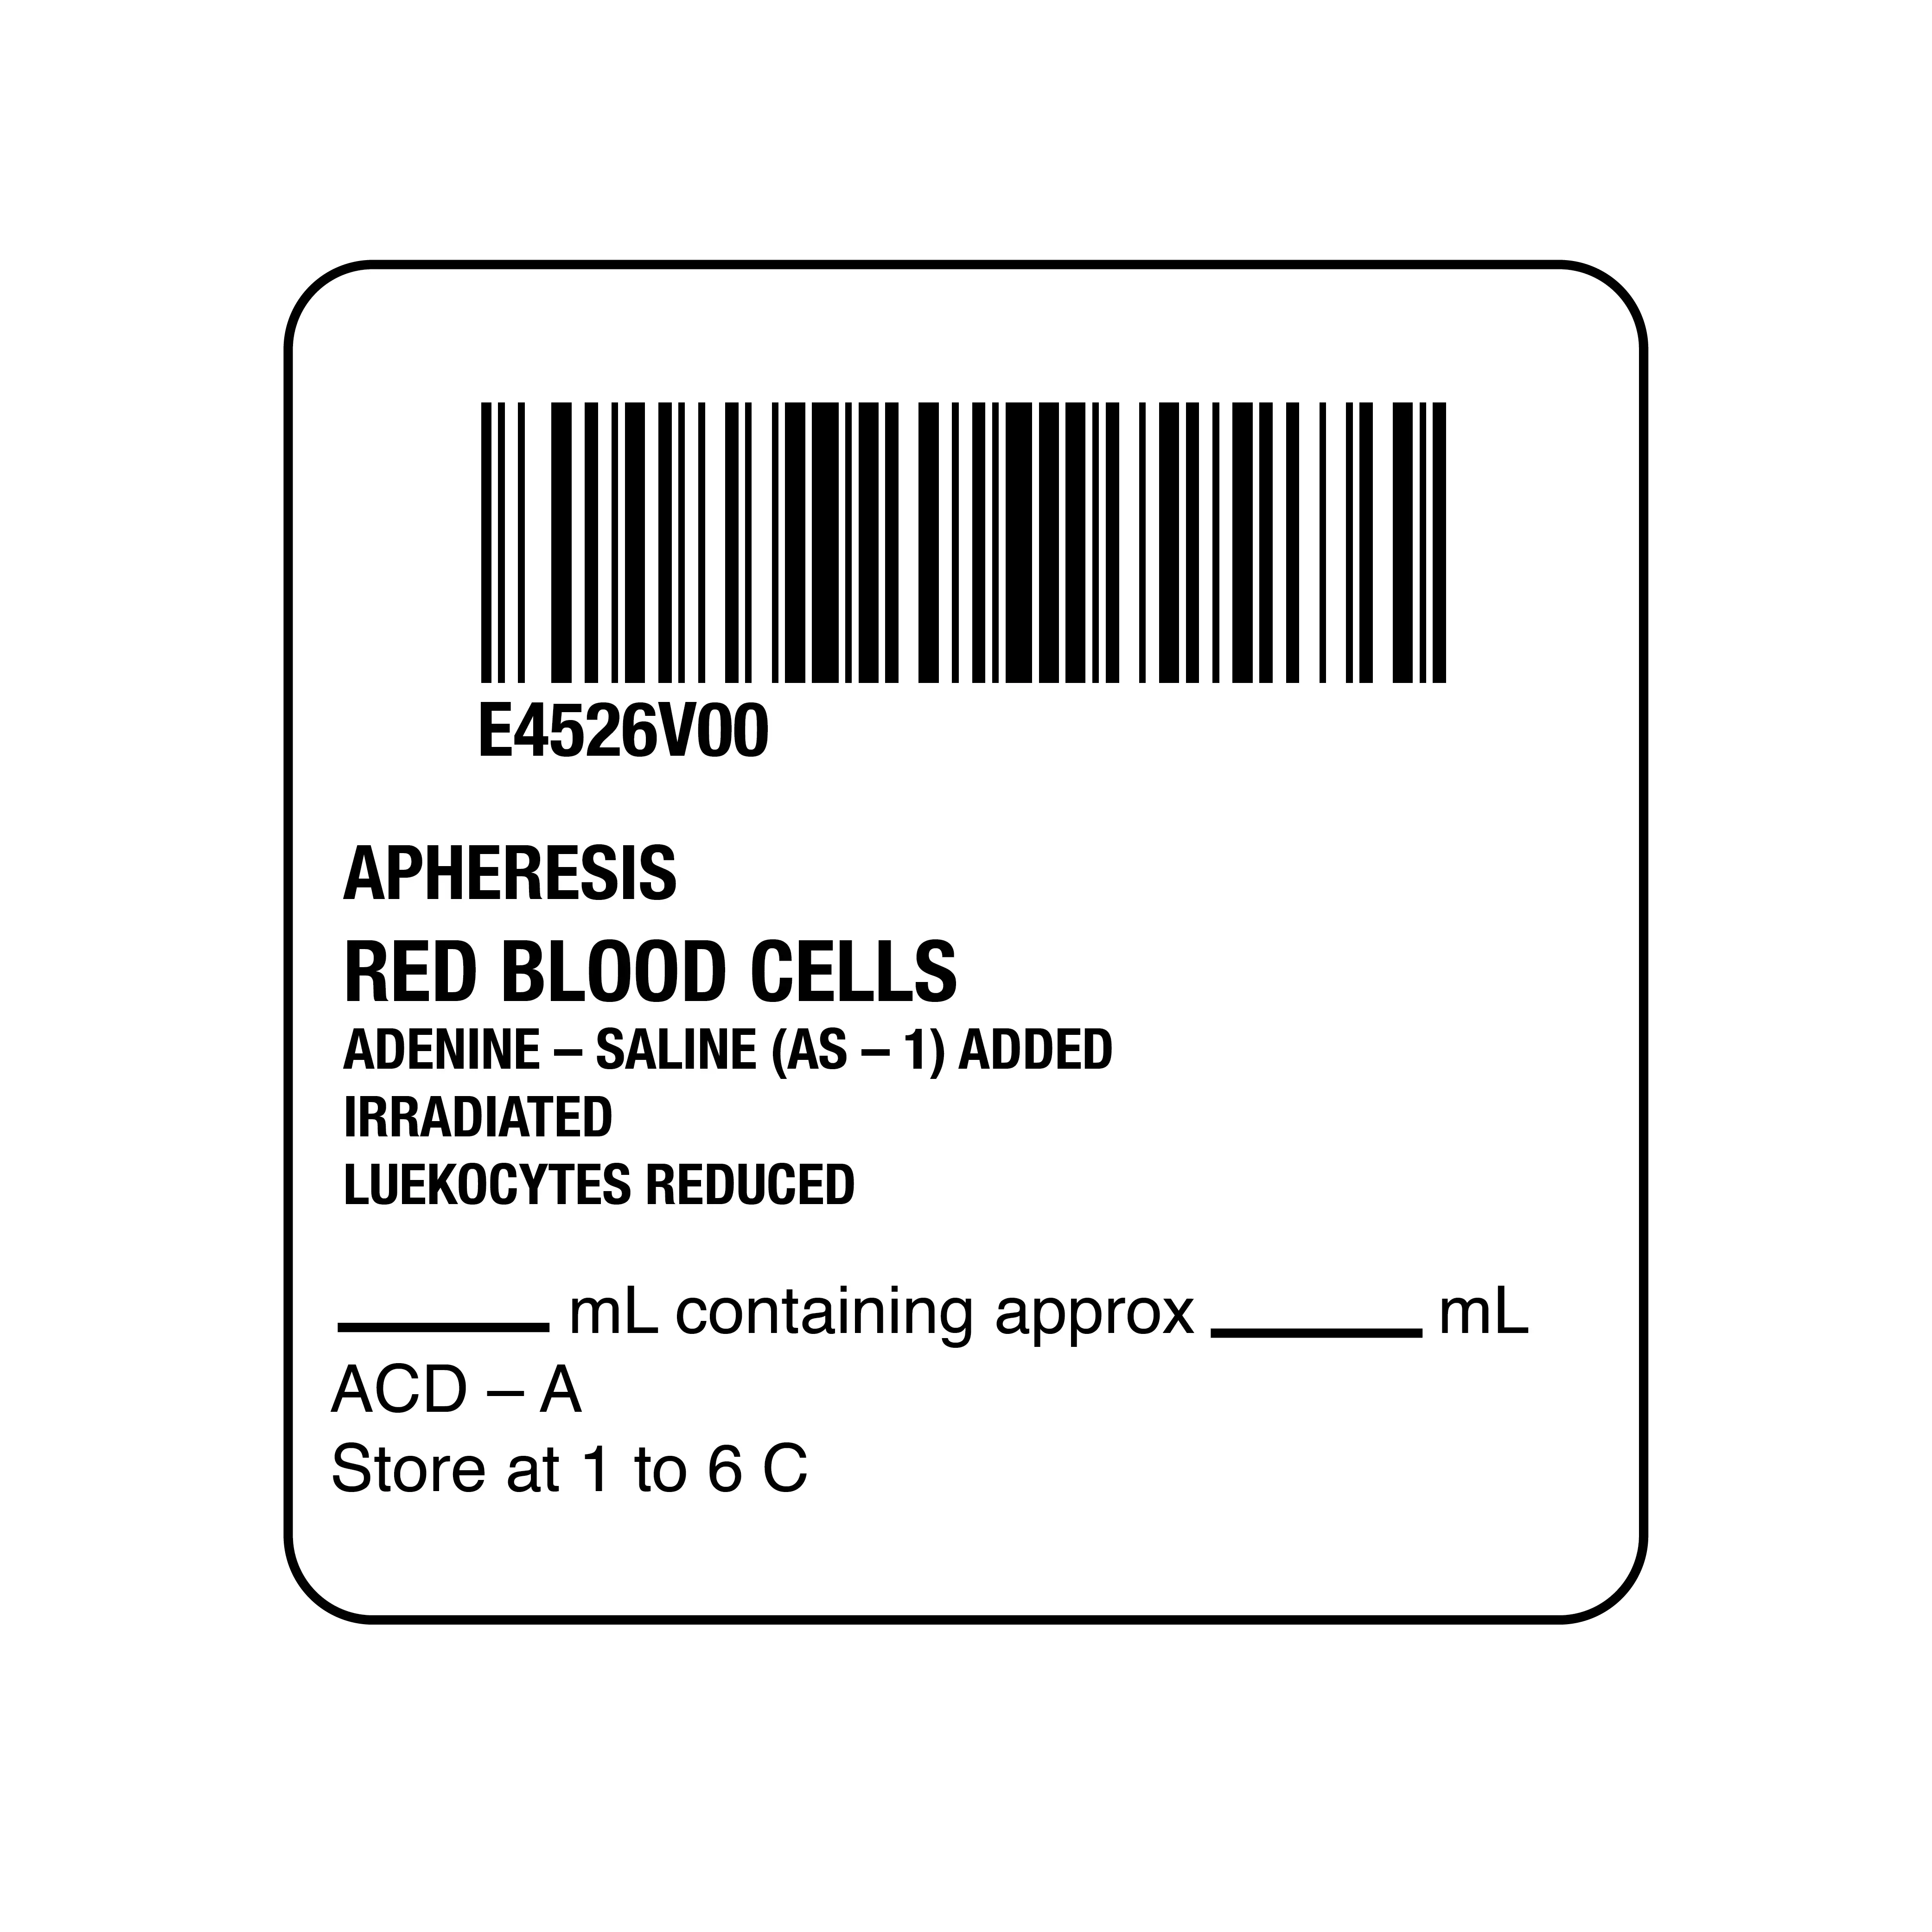 ISBT 128 Apheresis Red Blood Cells